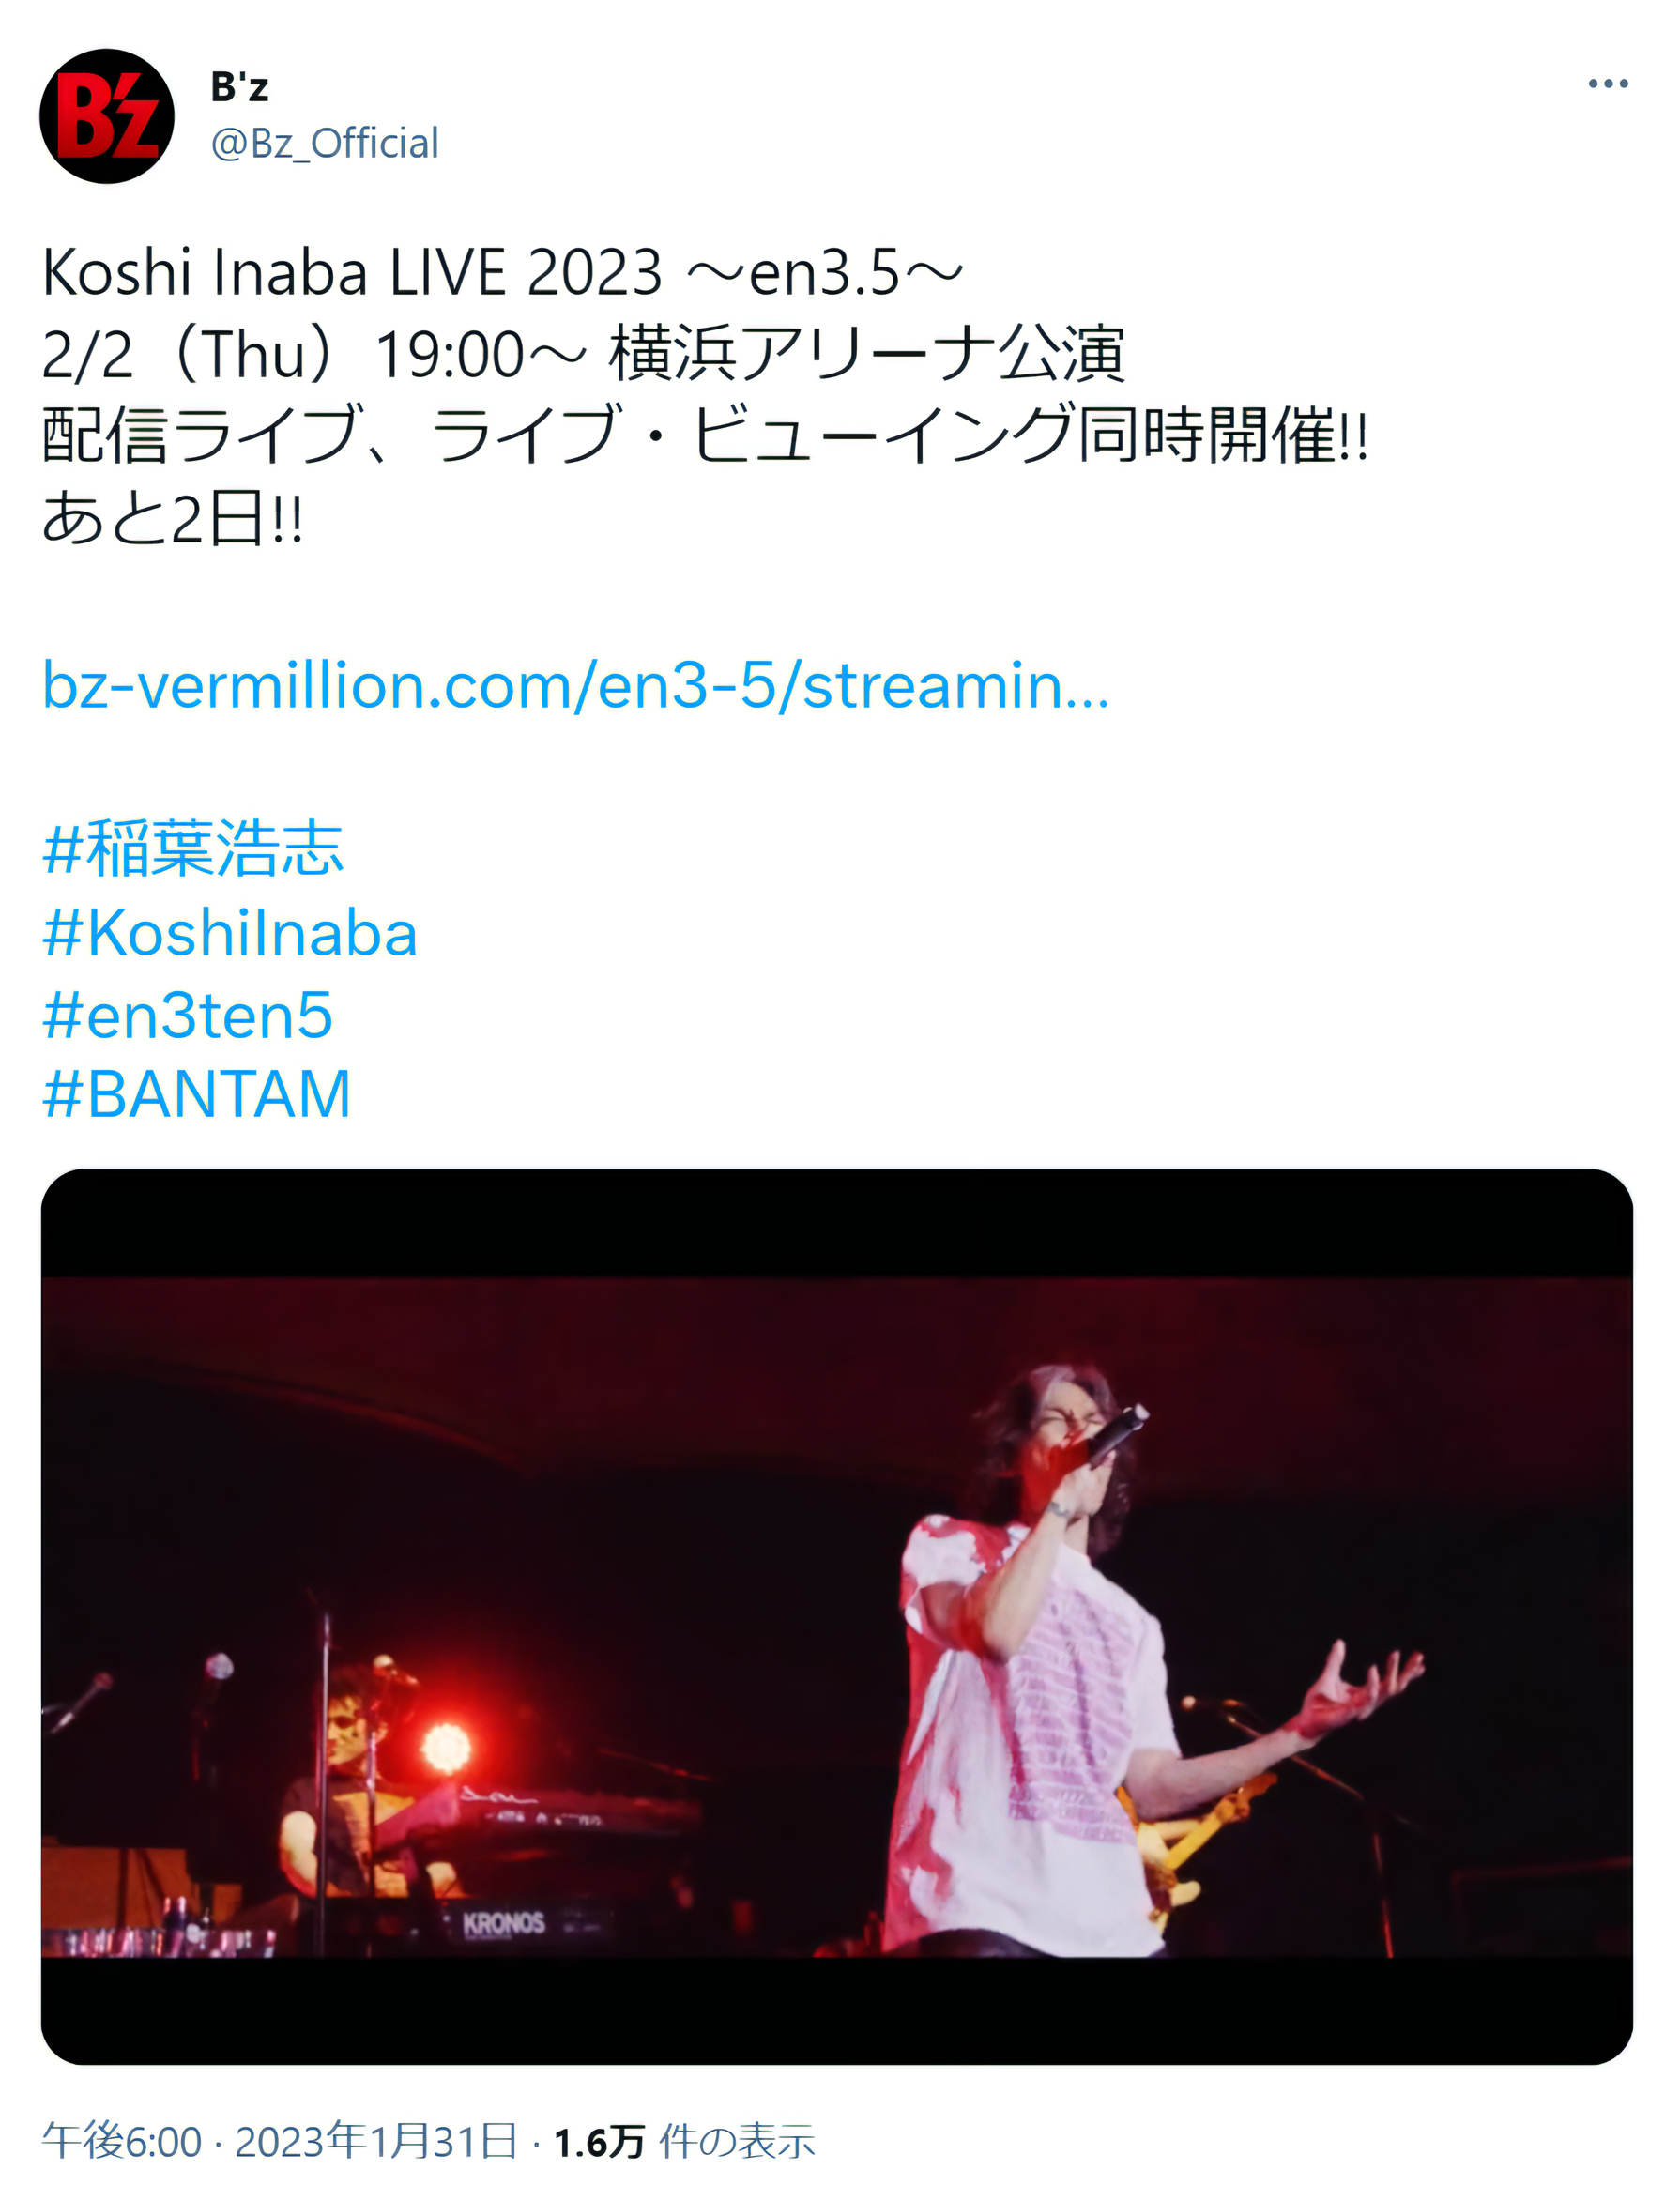 B'z公式Twitterで公開されたBANTAMのライブ（『Koshi Inaba LIVE 2023 〜en-eX〜』）映像